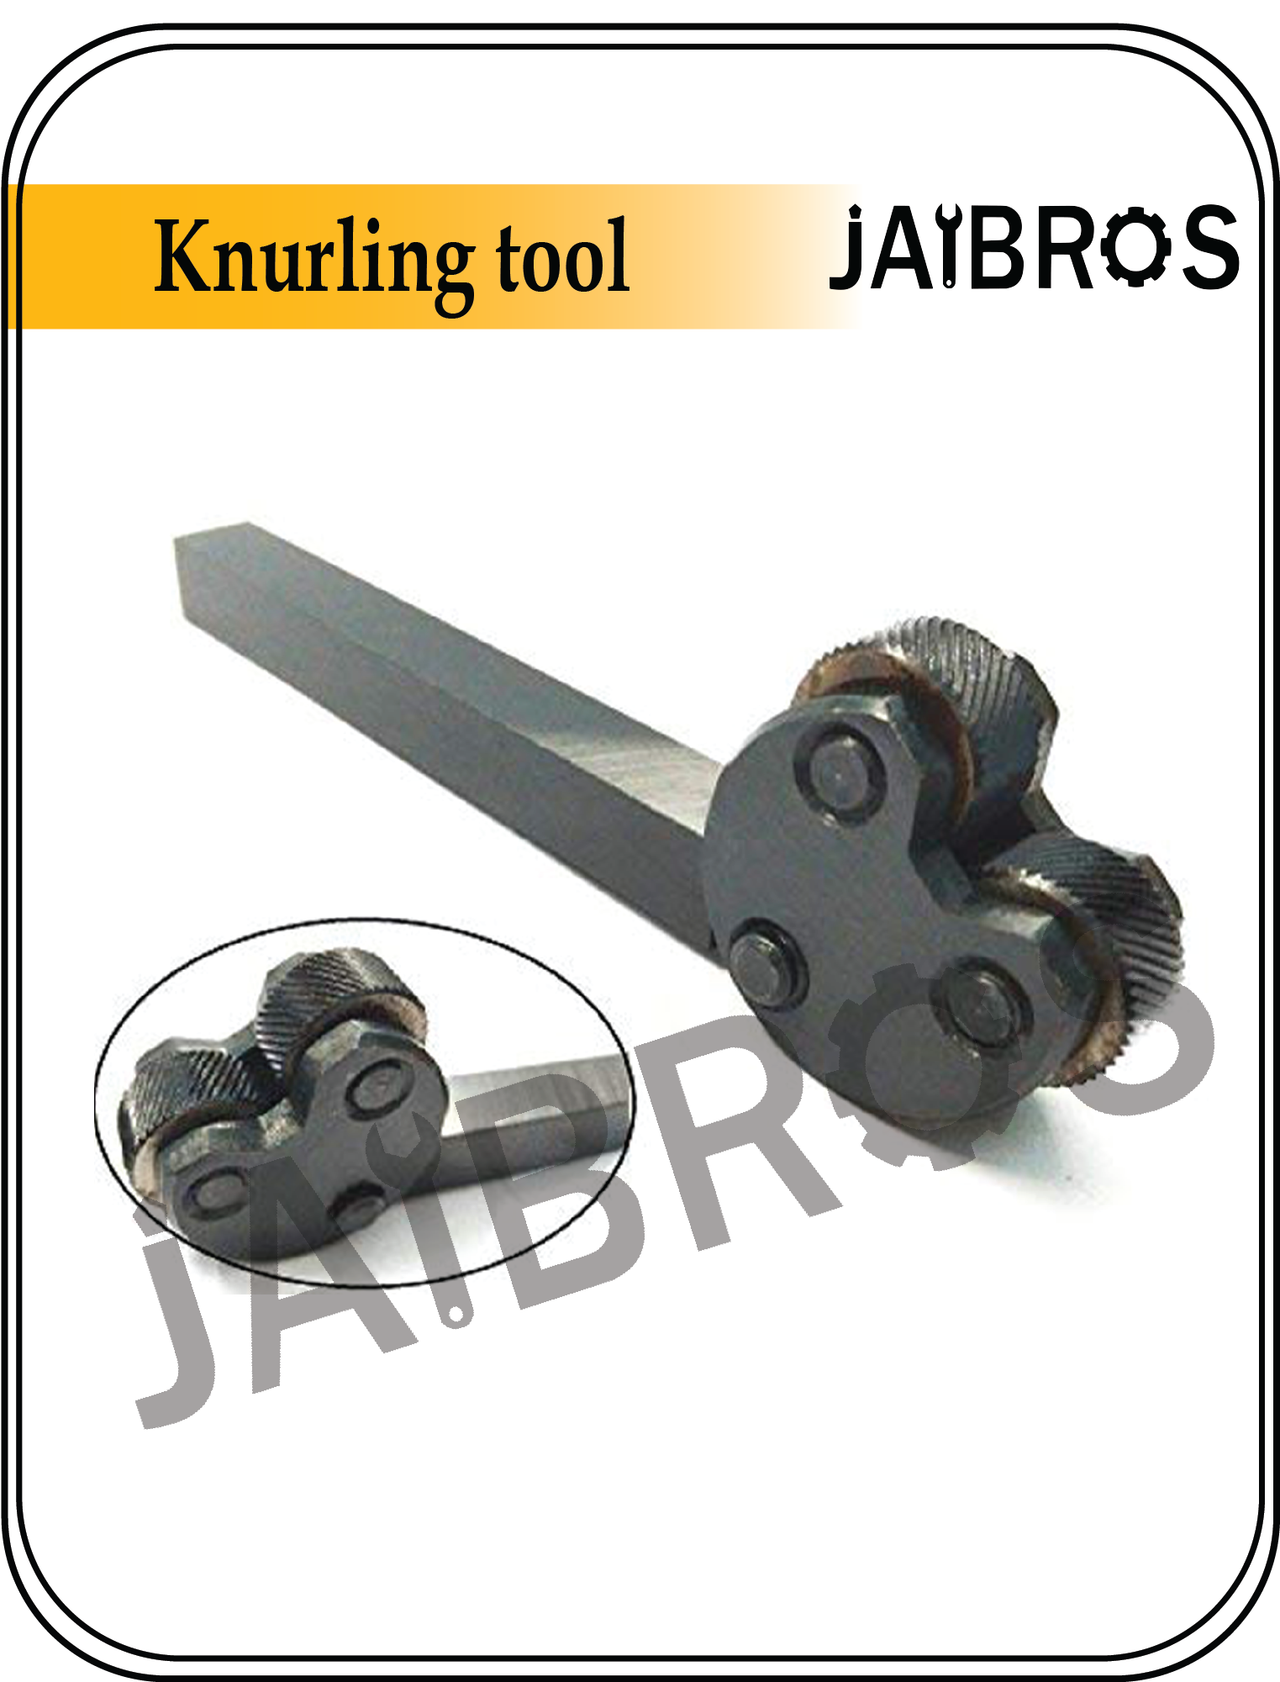 Knurling tool pivot head for lathe